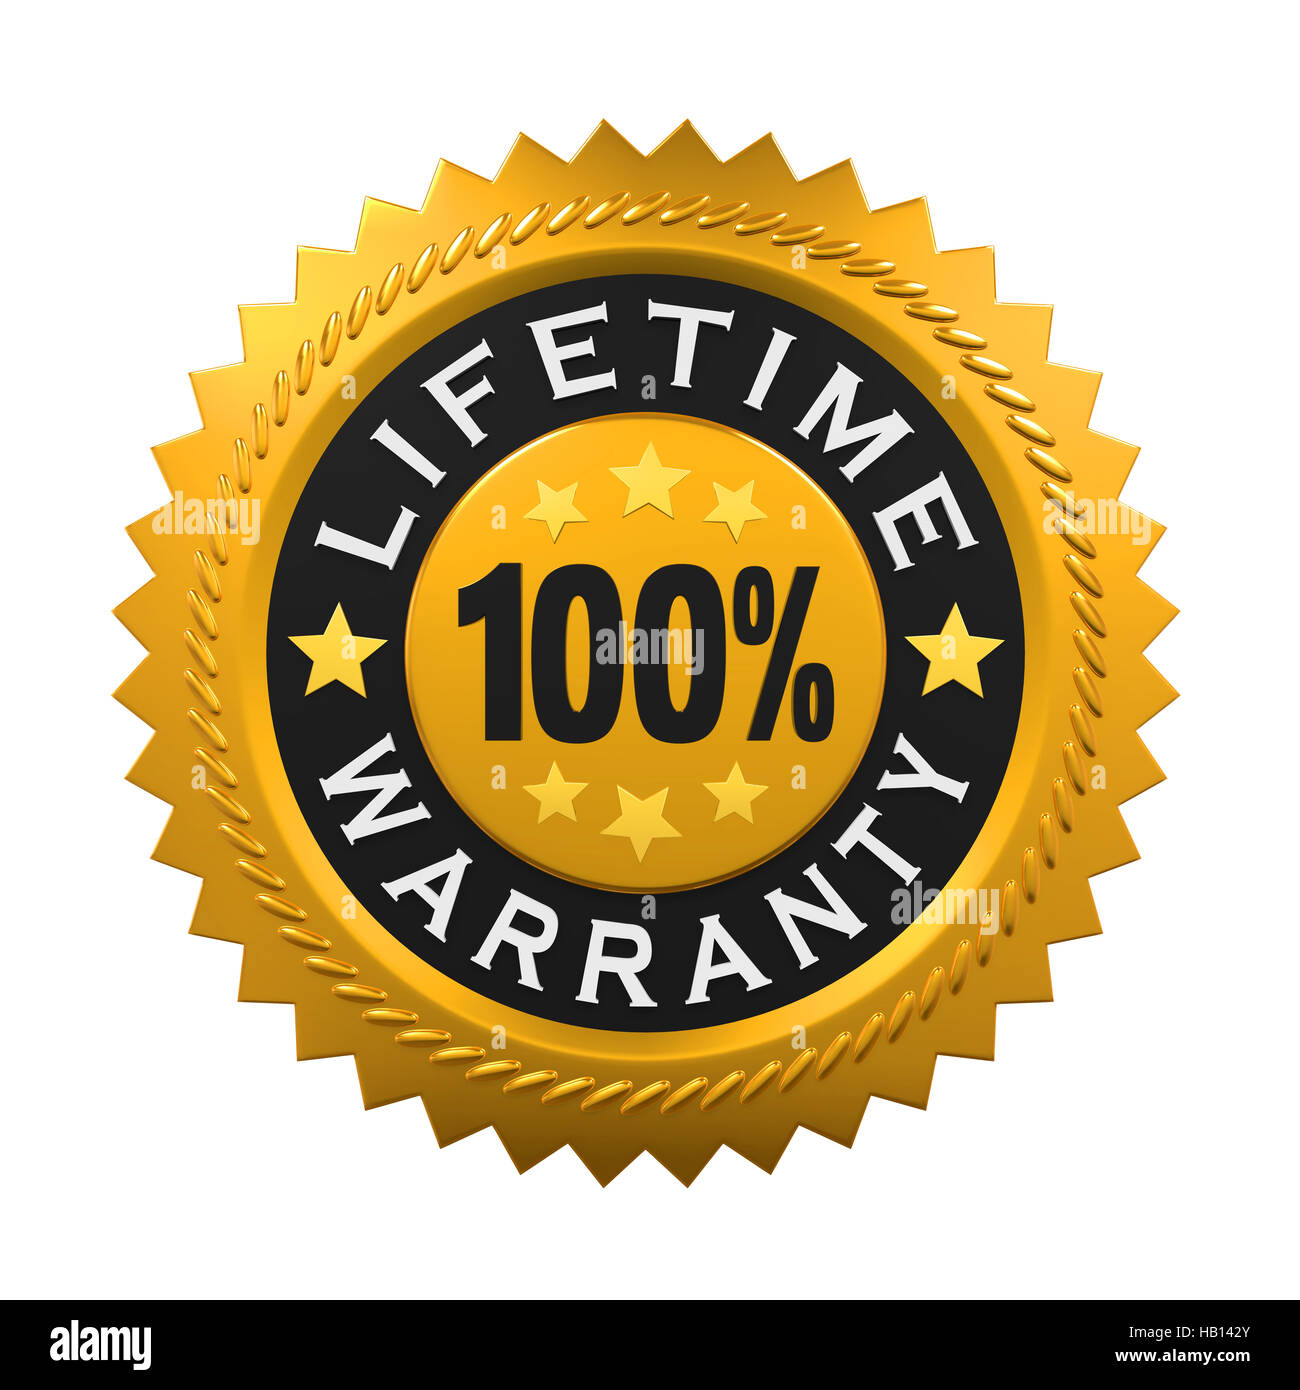 Life Time Warranty Label Stock Photo